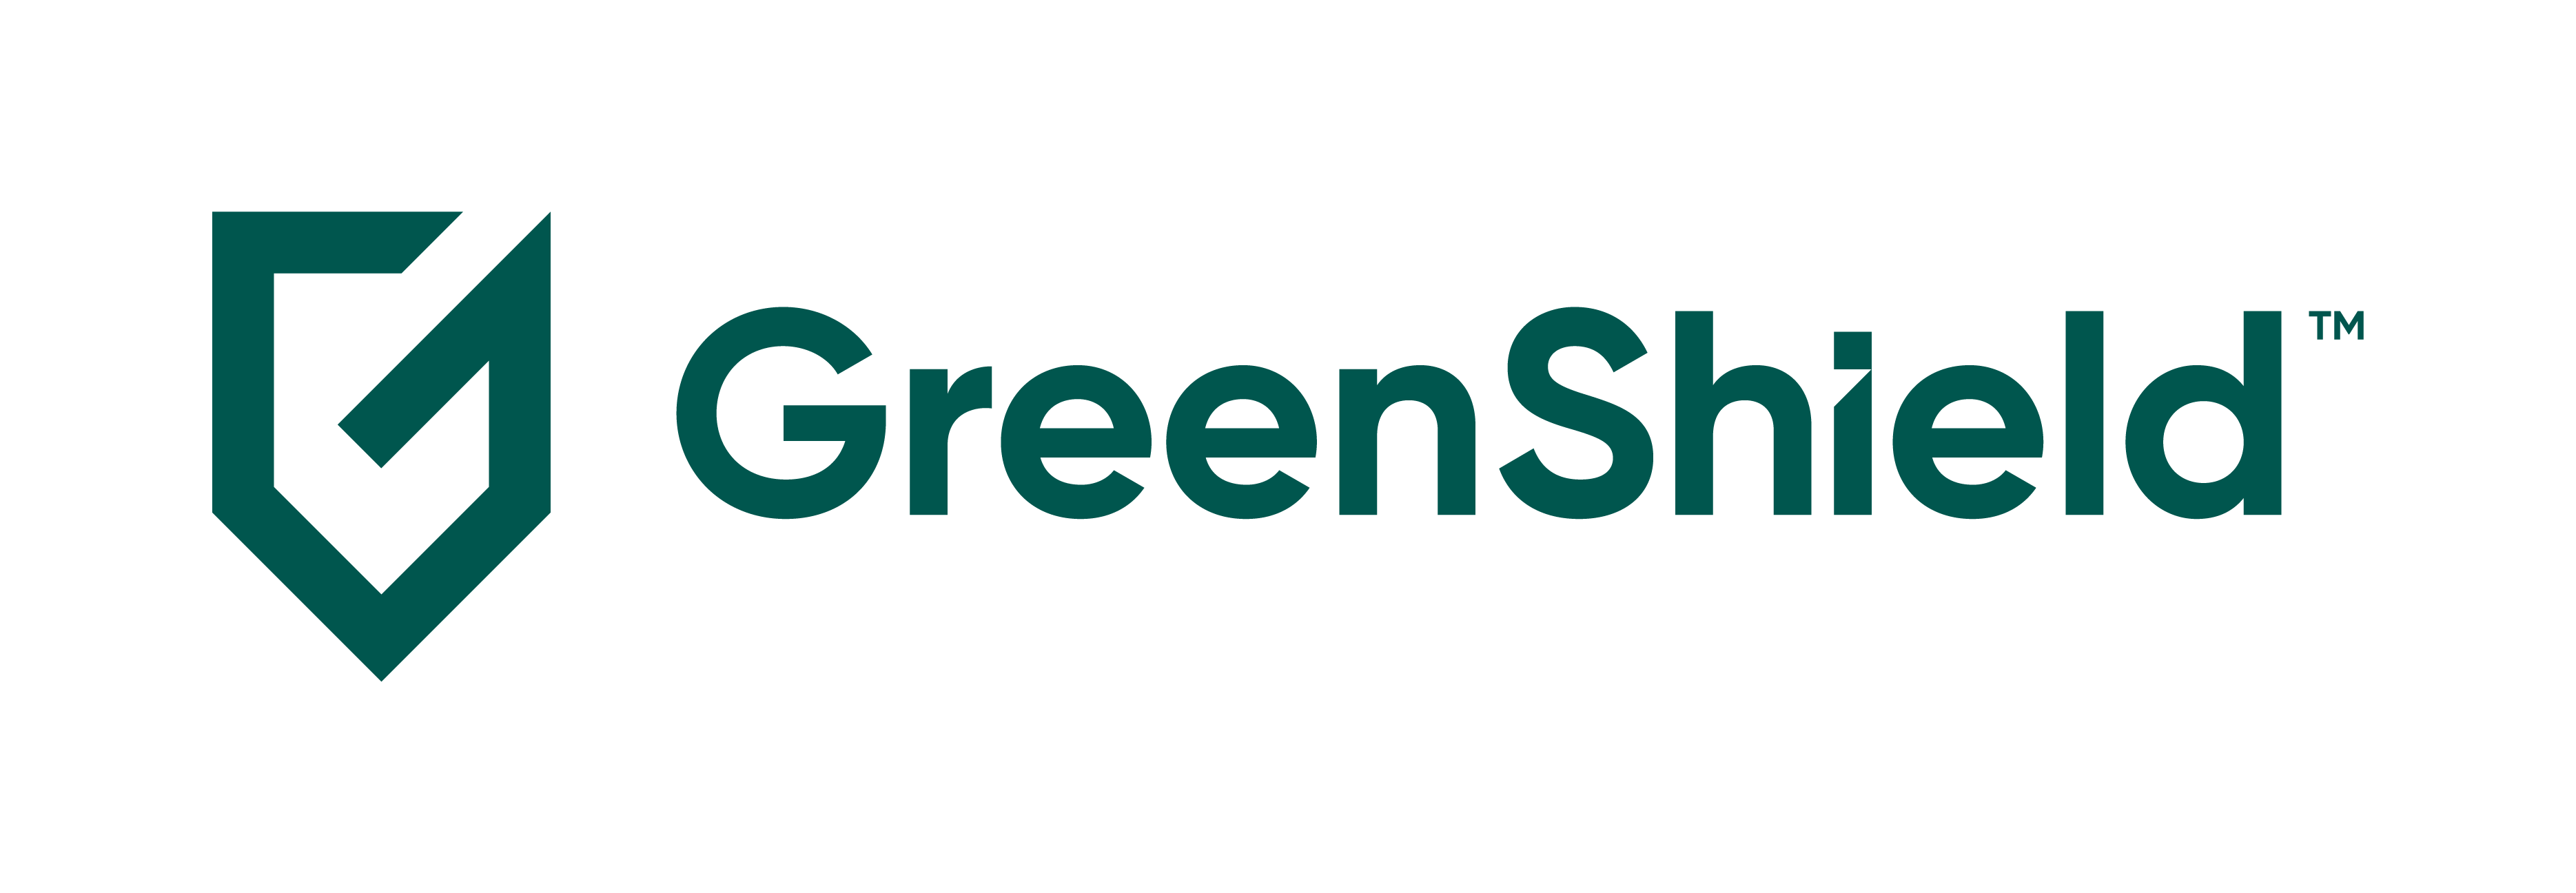 greenshield_logo_green_rgb